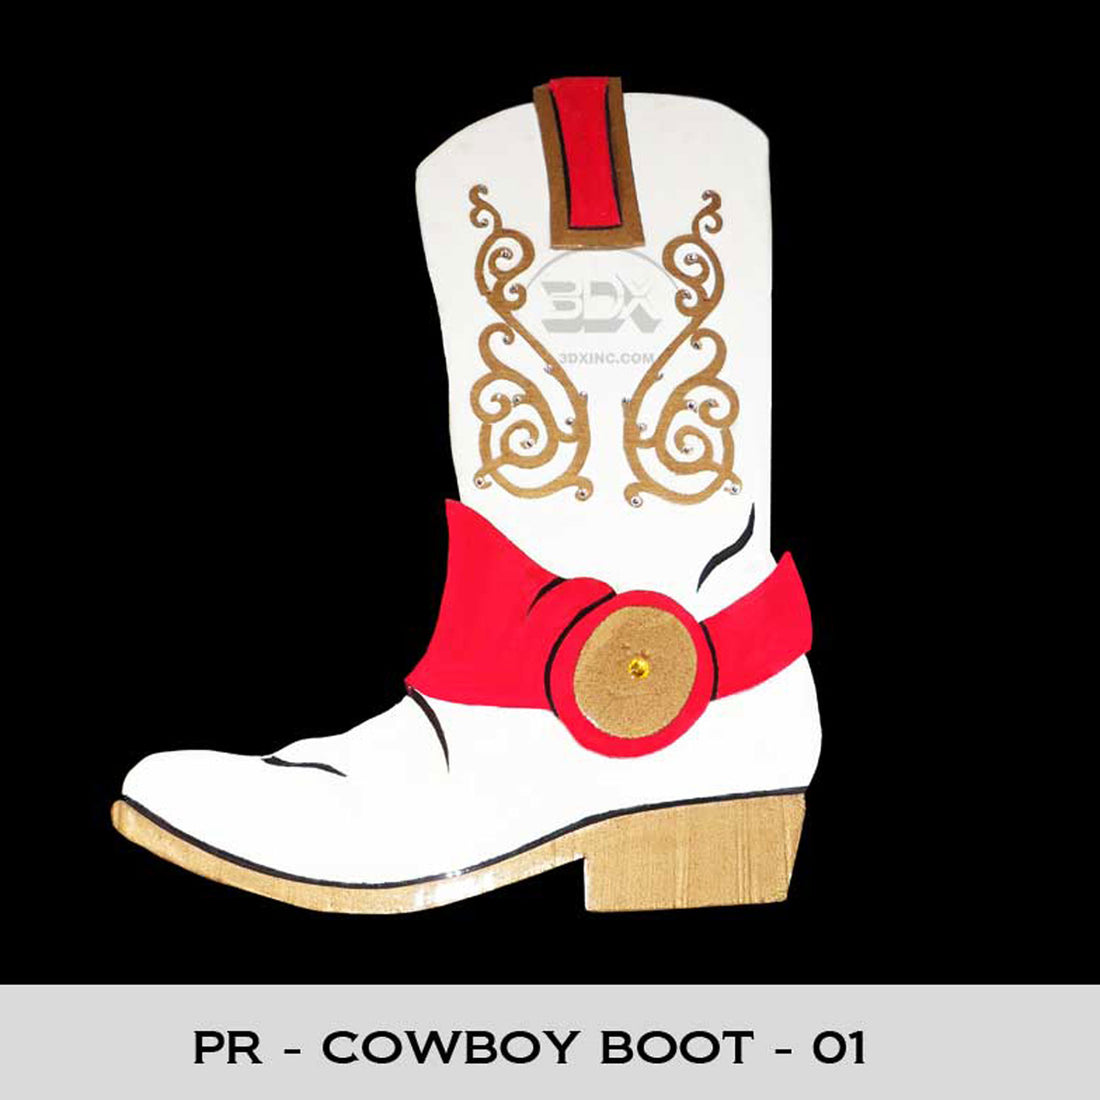 PR - COWBOY BOOT - 01